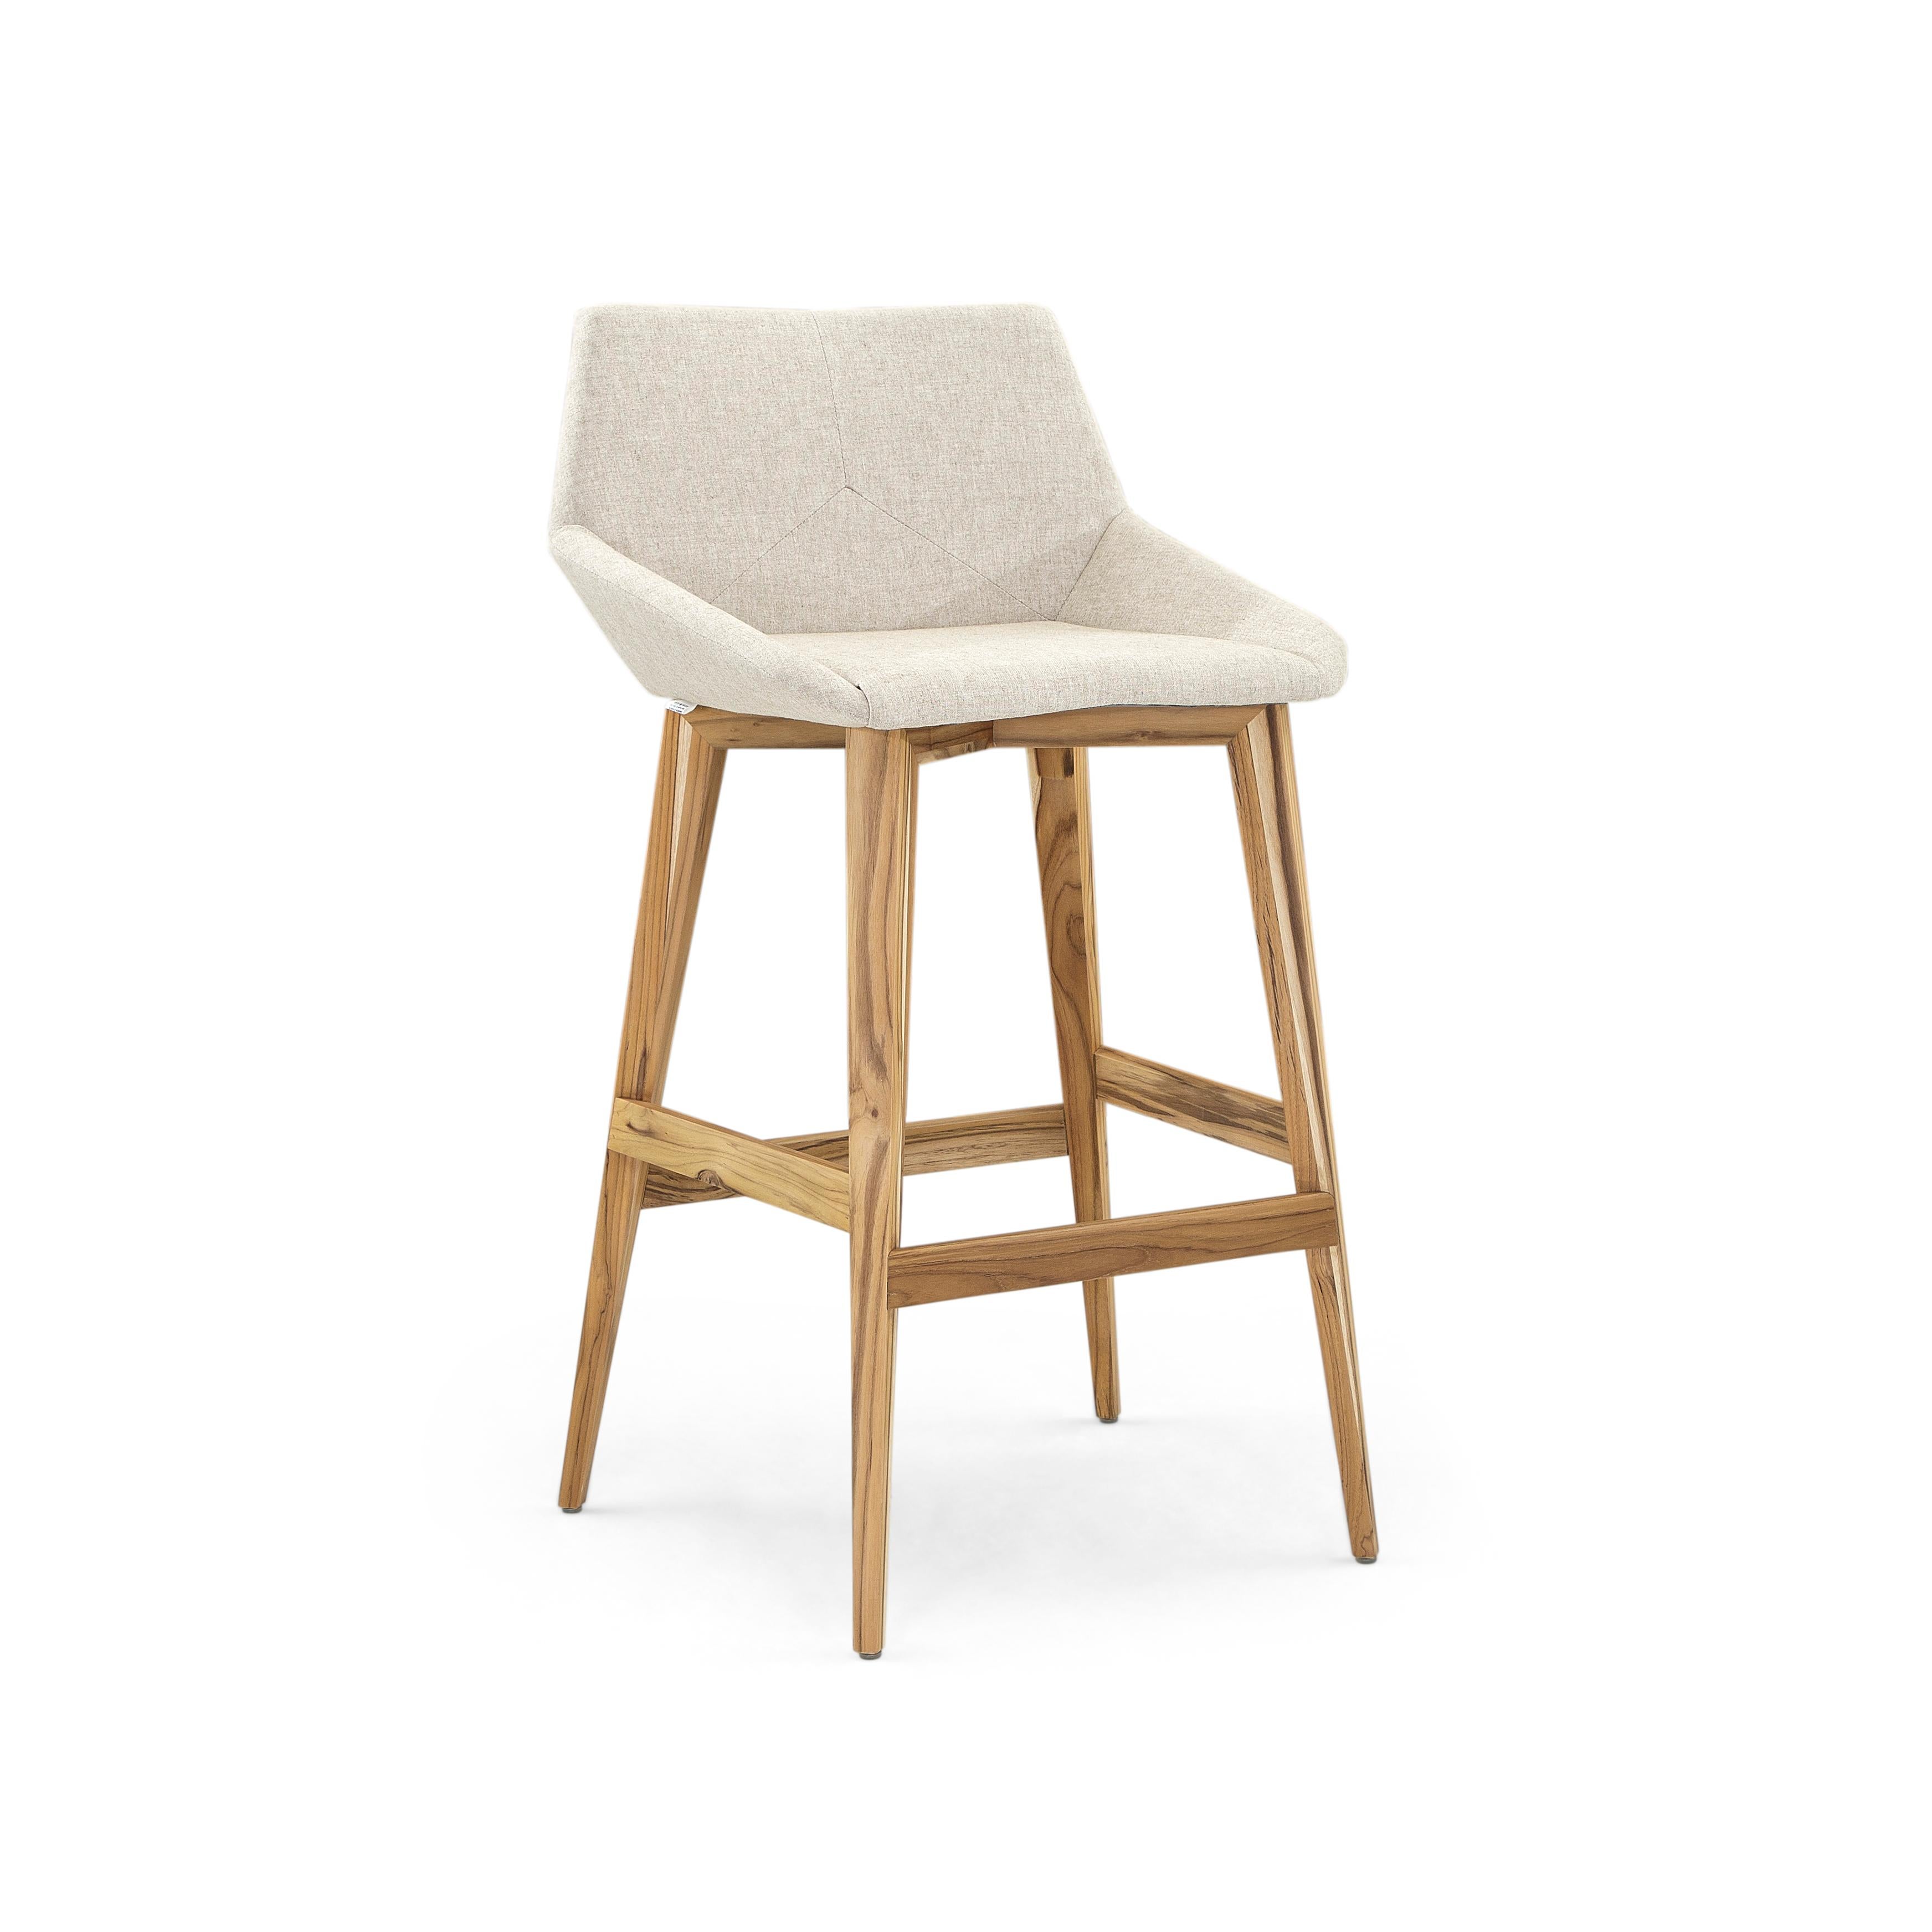 Geometric Cubi Bar Stool with Teak Wood Finish Base and Oatmeal Fabric Seat For Sale